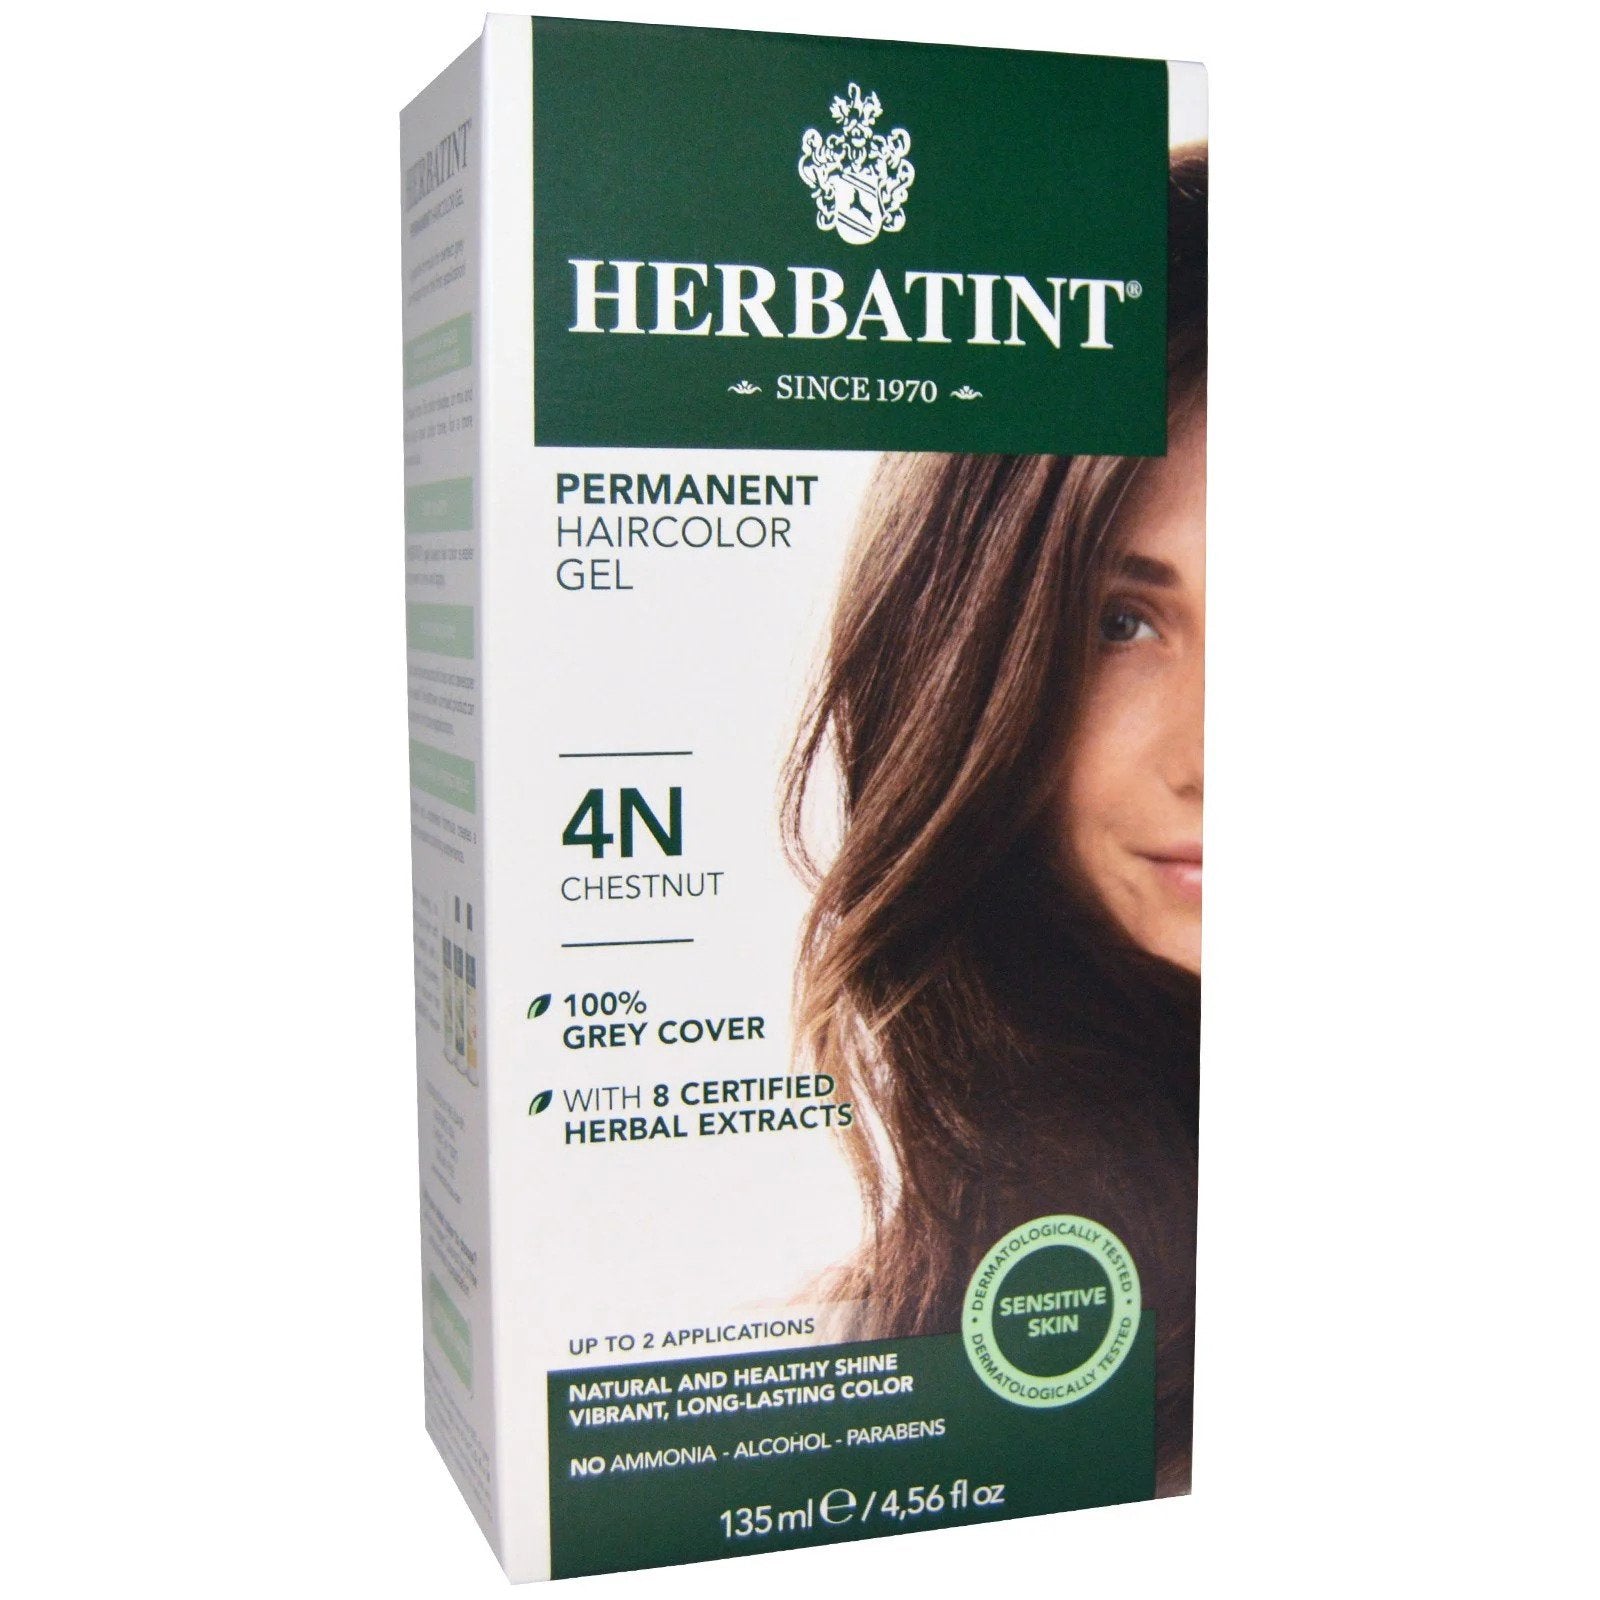 Herbatint - Permanent Haircolor Gel (4N - Chestnut)